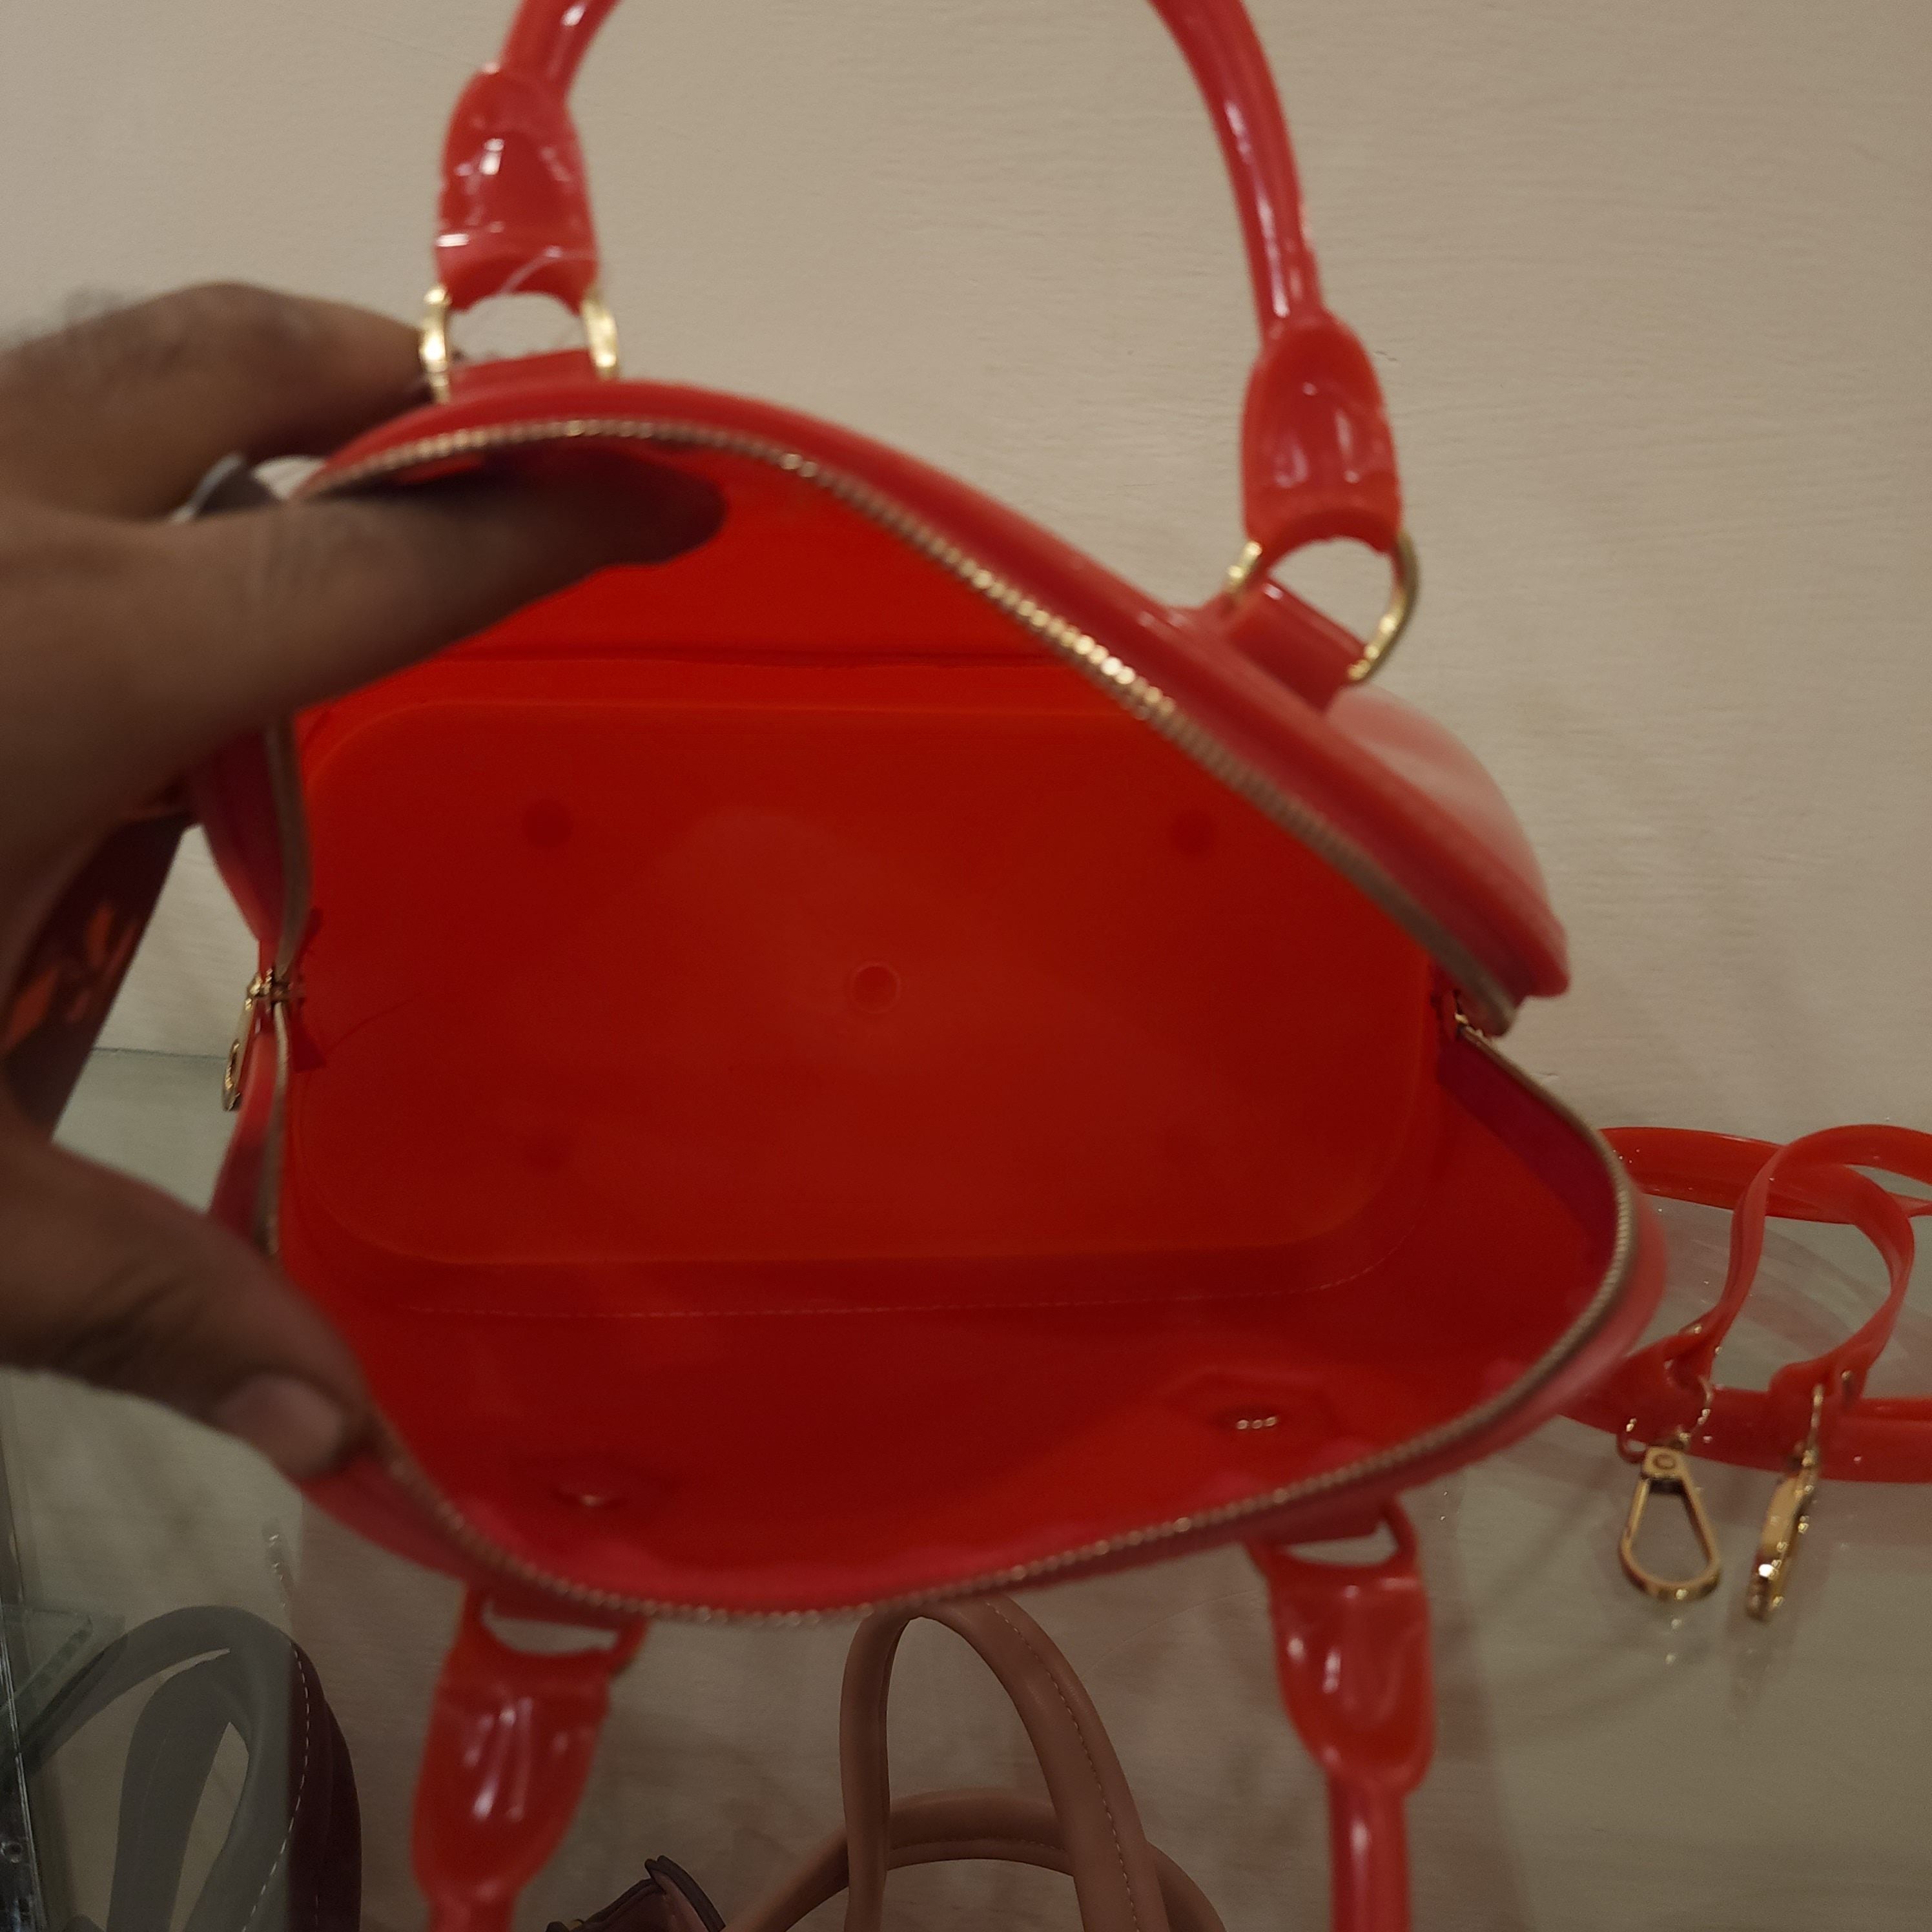 Red Jelly Handbag - Maha fashions -  Handbags & Wallets